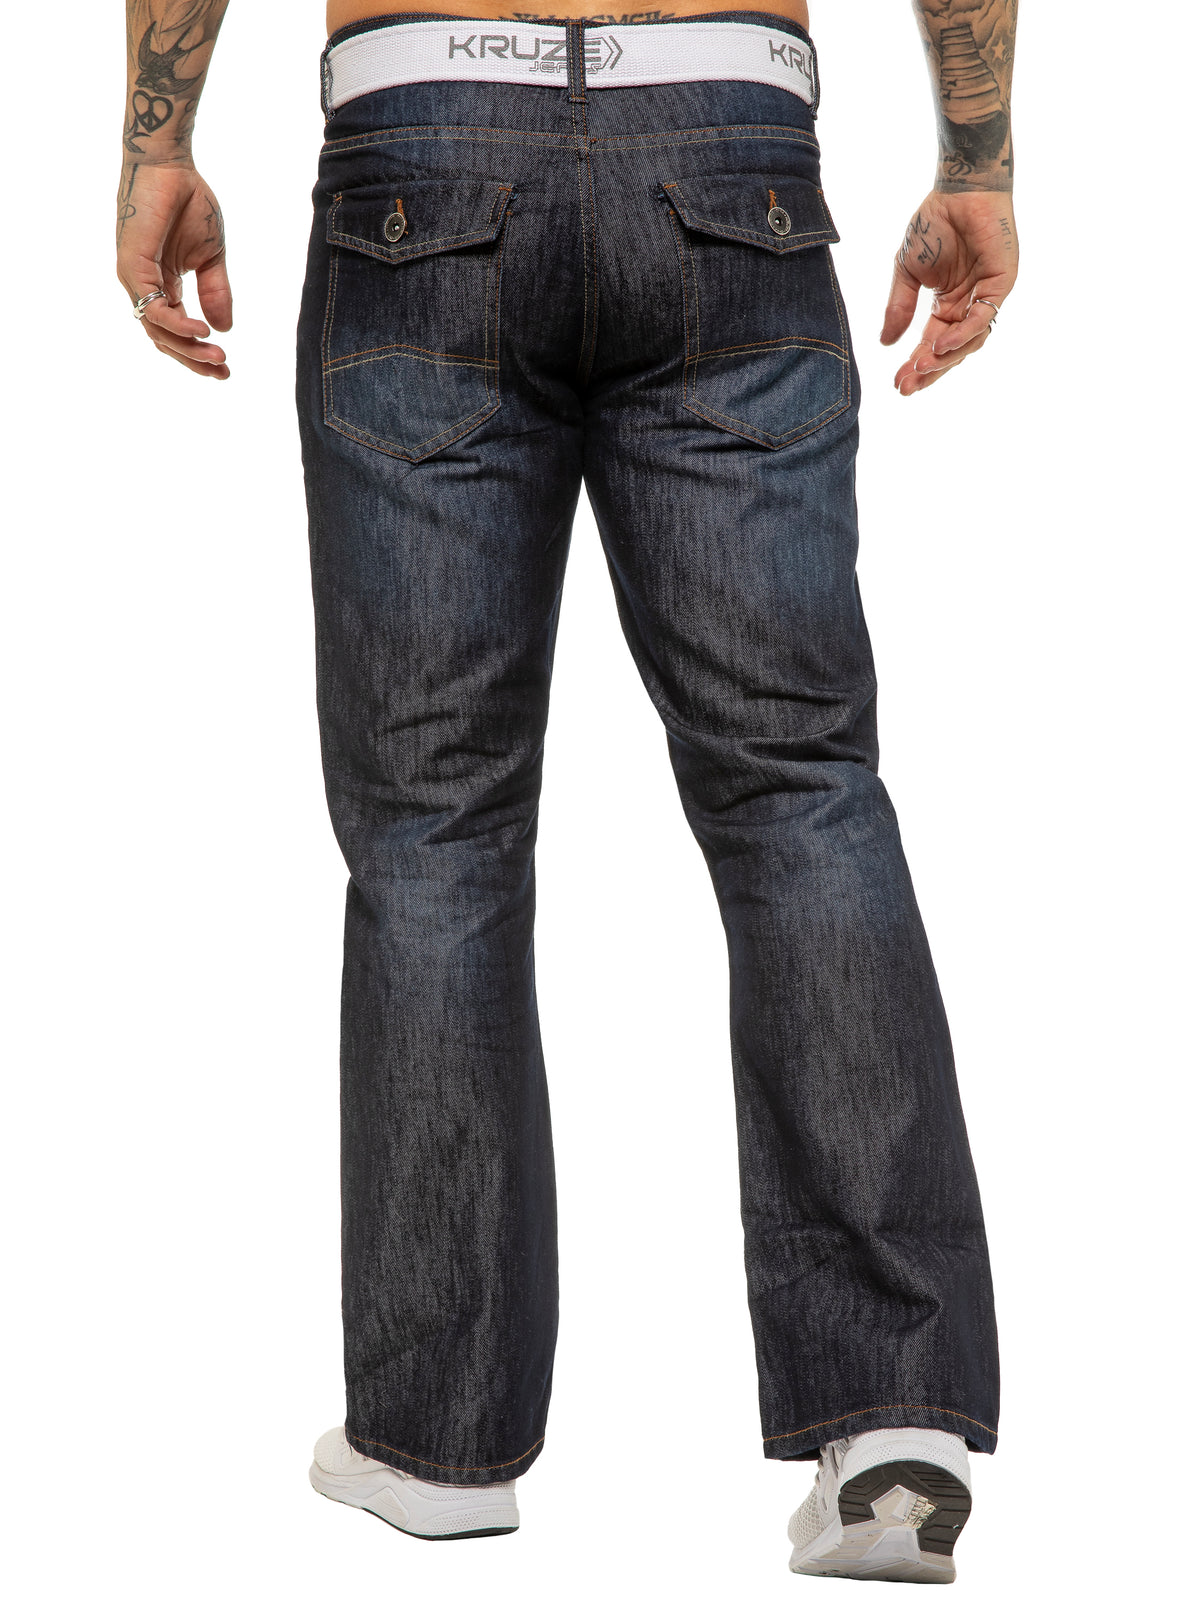 Kruze Mens Cuffed Jeans Regular Fit Jogger Denim Pants Trousers